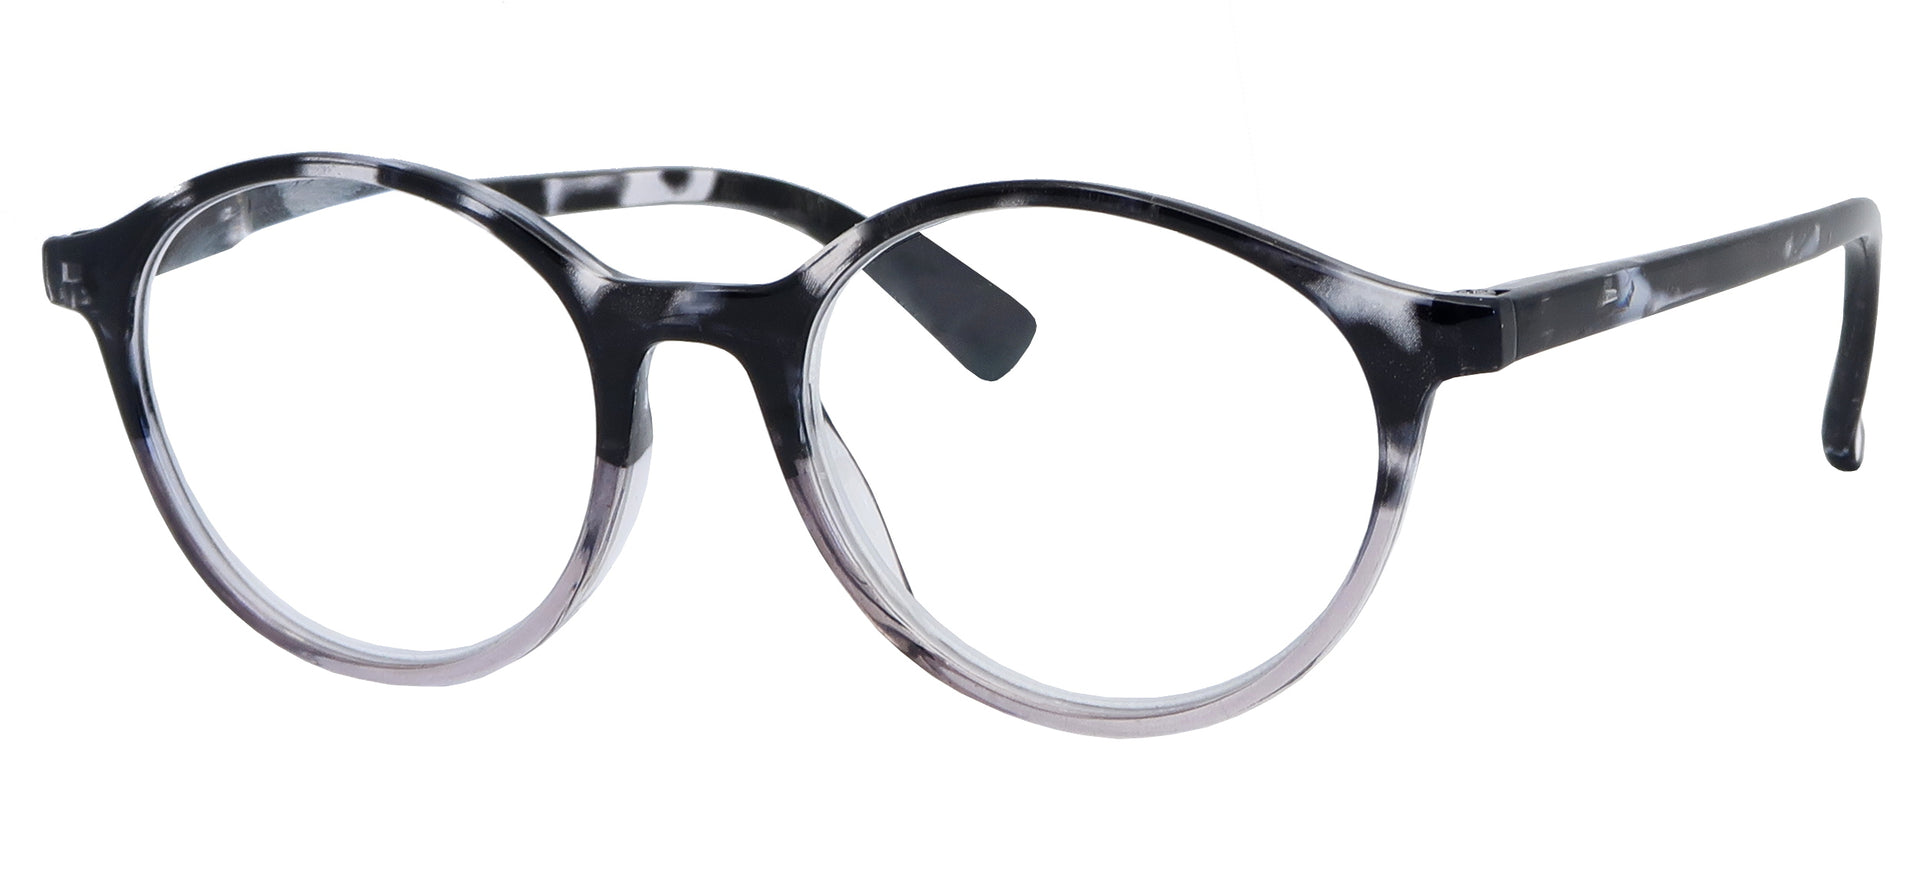 ST1504R -  Wholesale Unisex Basic Oval Style Reading Glasses in Grey Tortoise